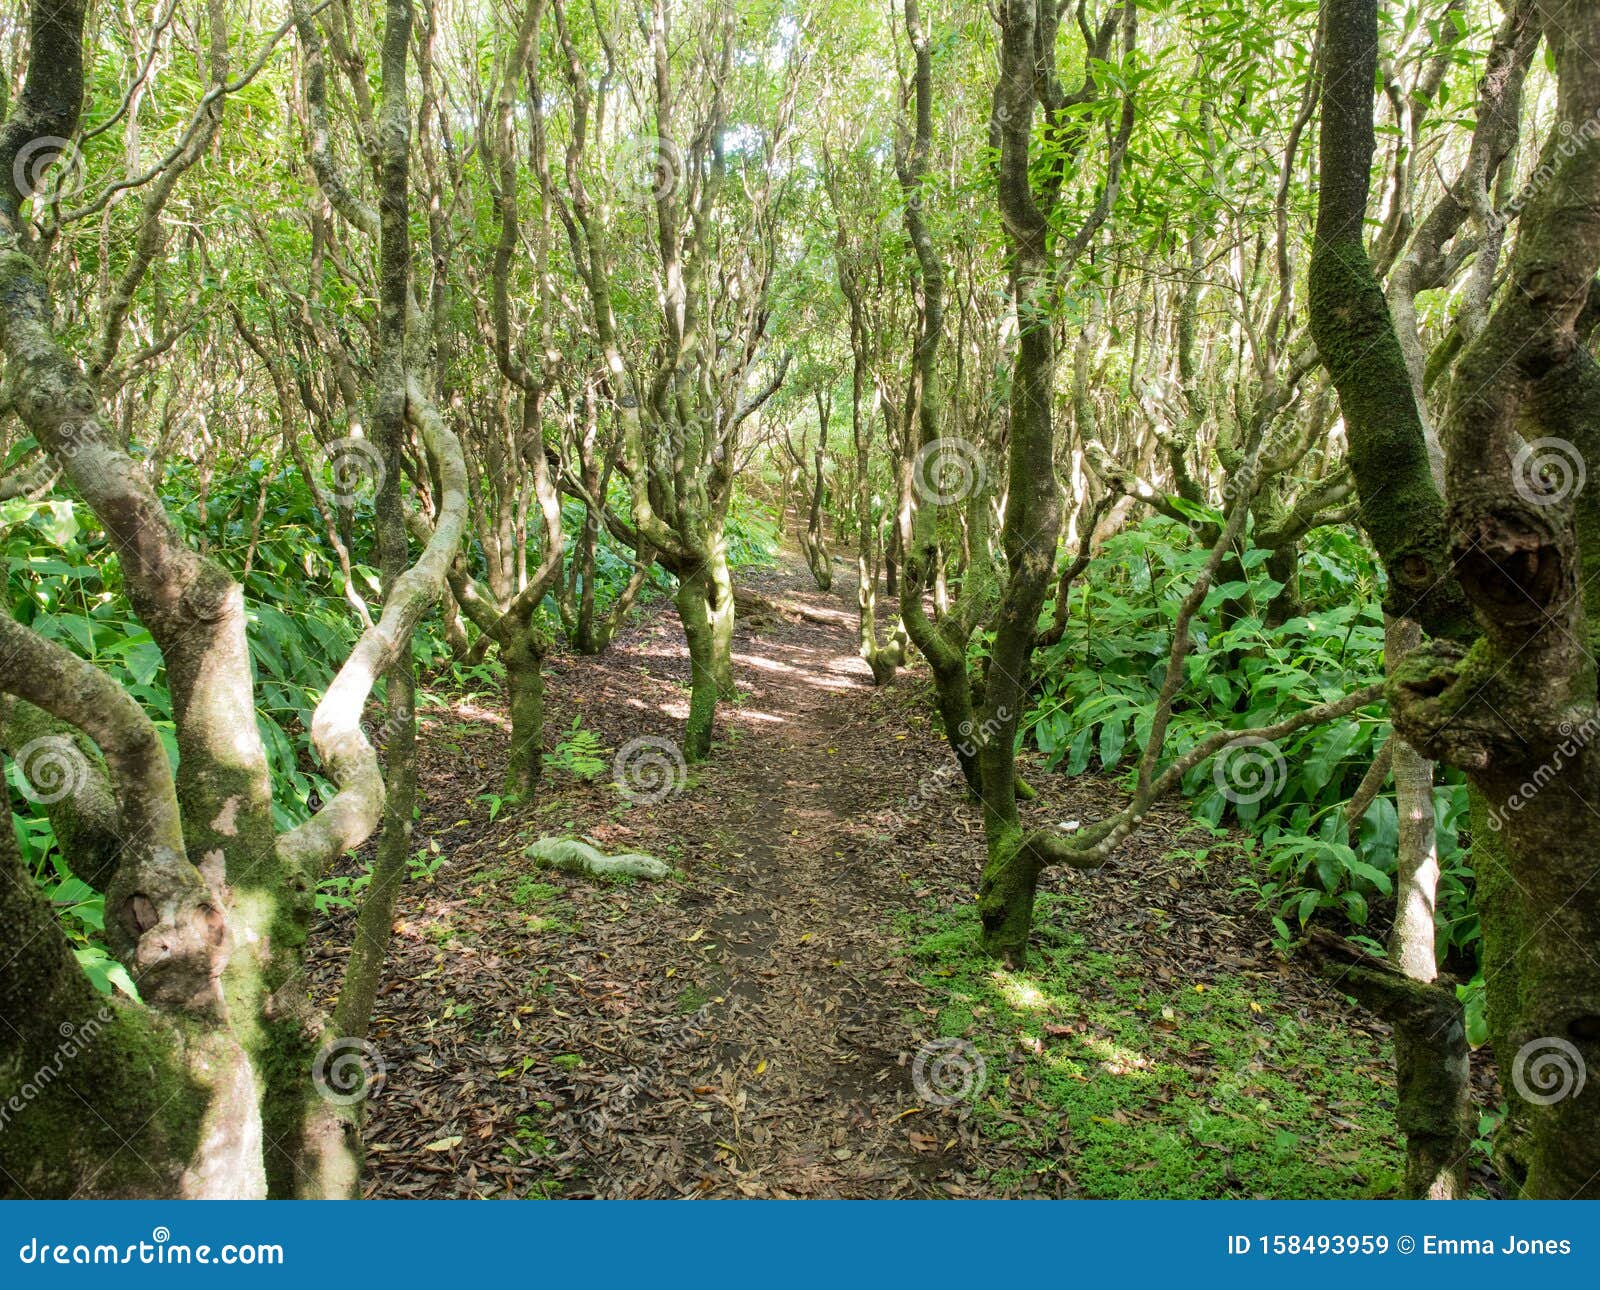 hike through the forest on faial island, azores archipelago